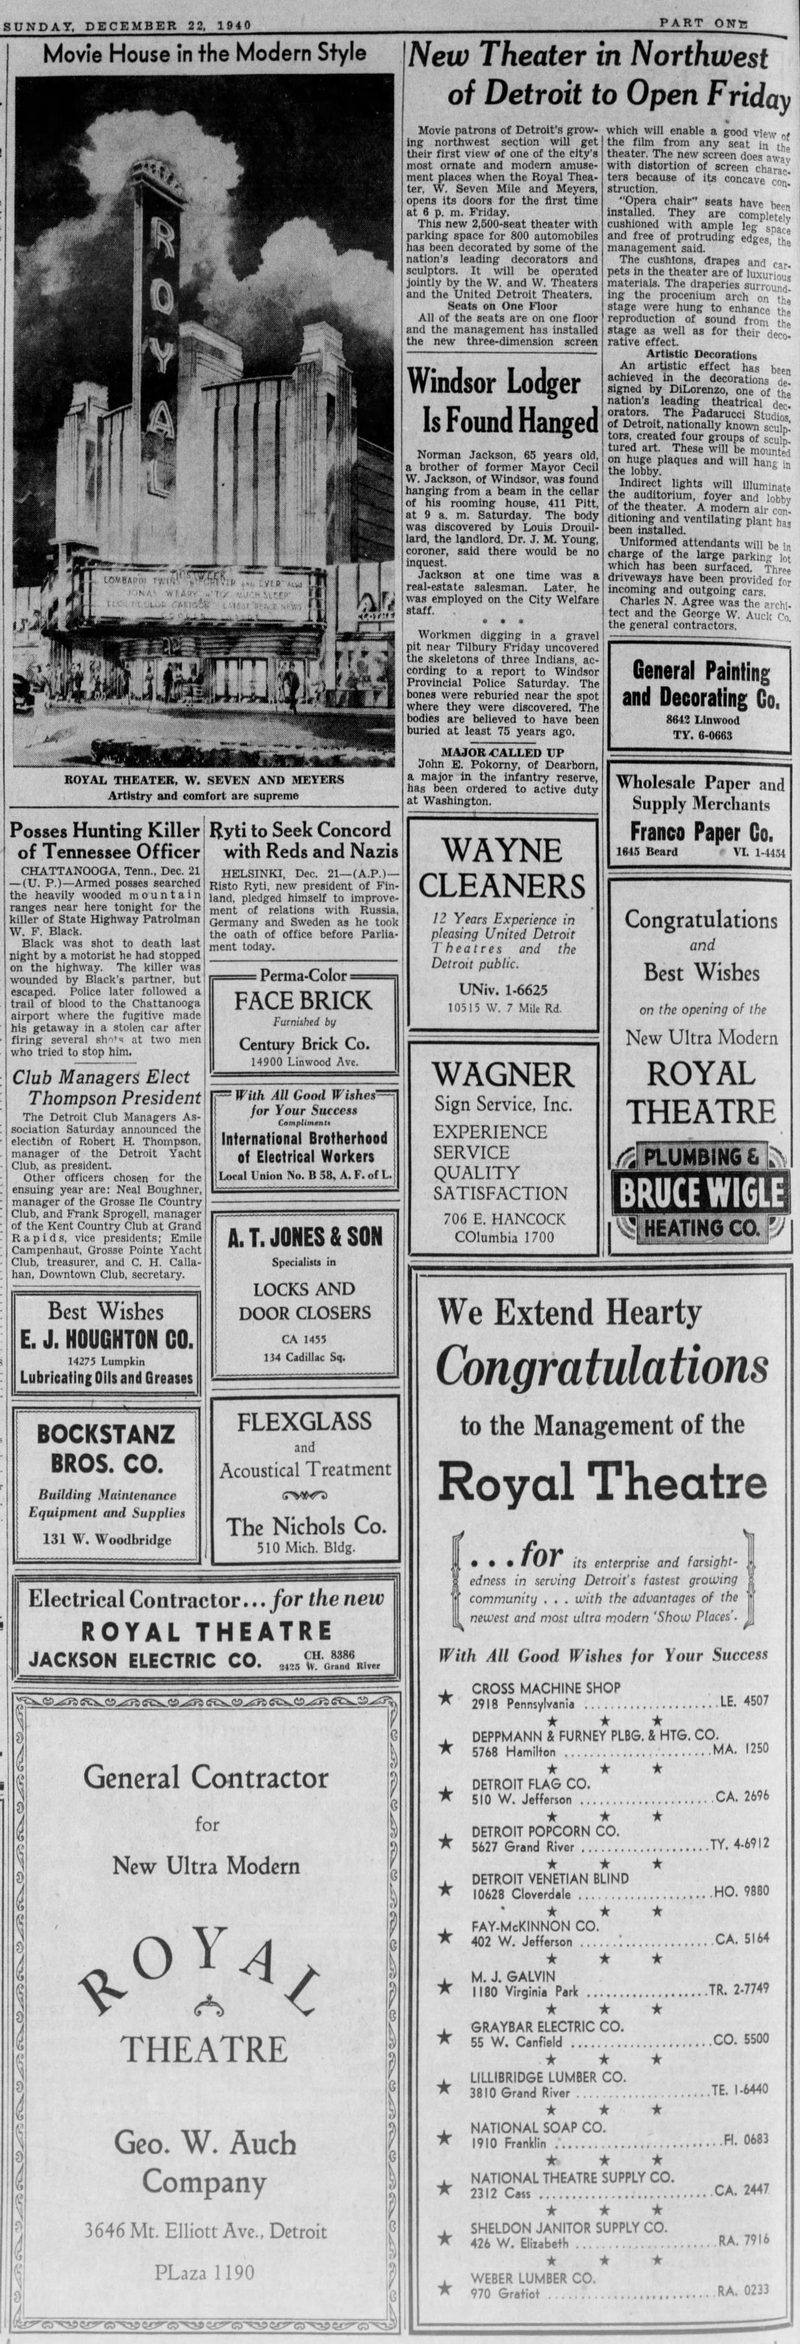 Royal Theatre - Dec 22 1940 Opening